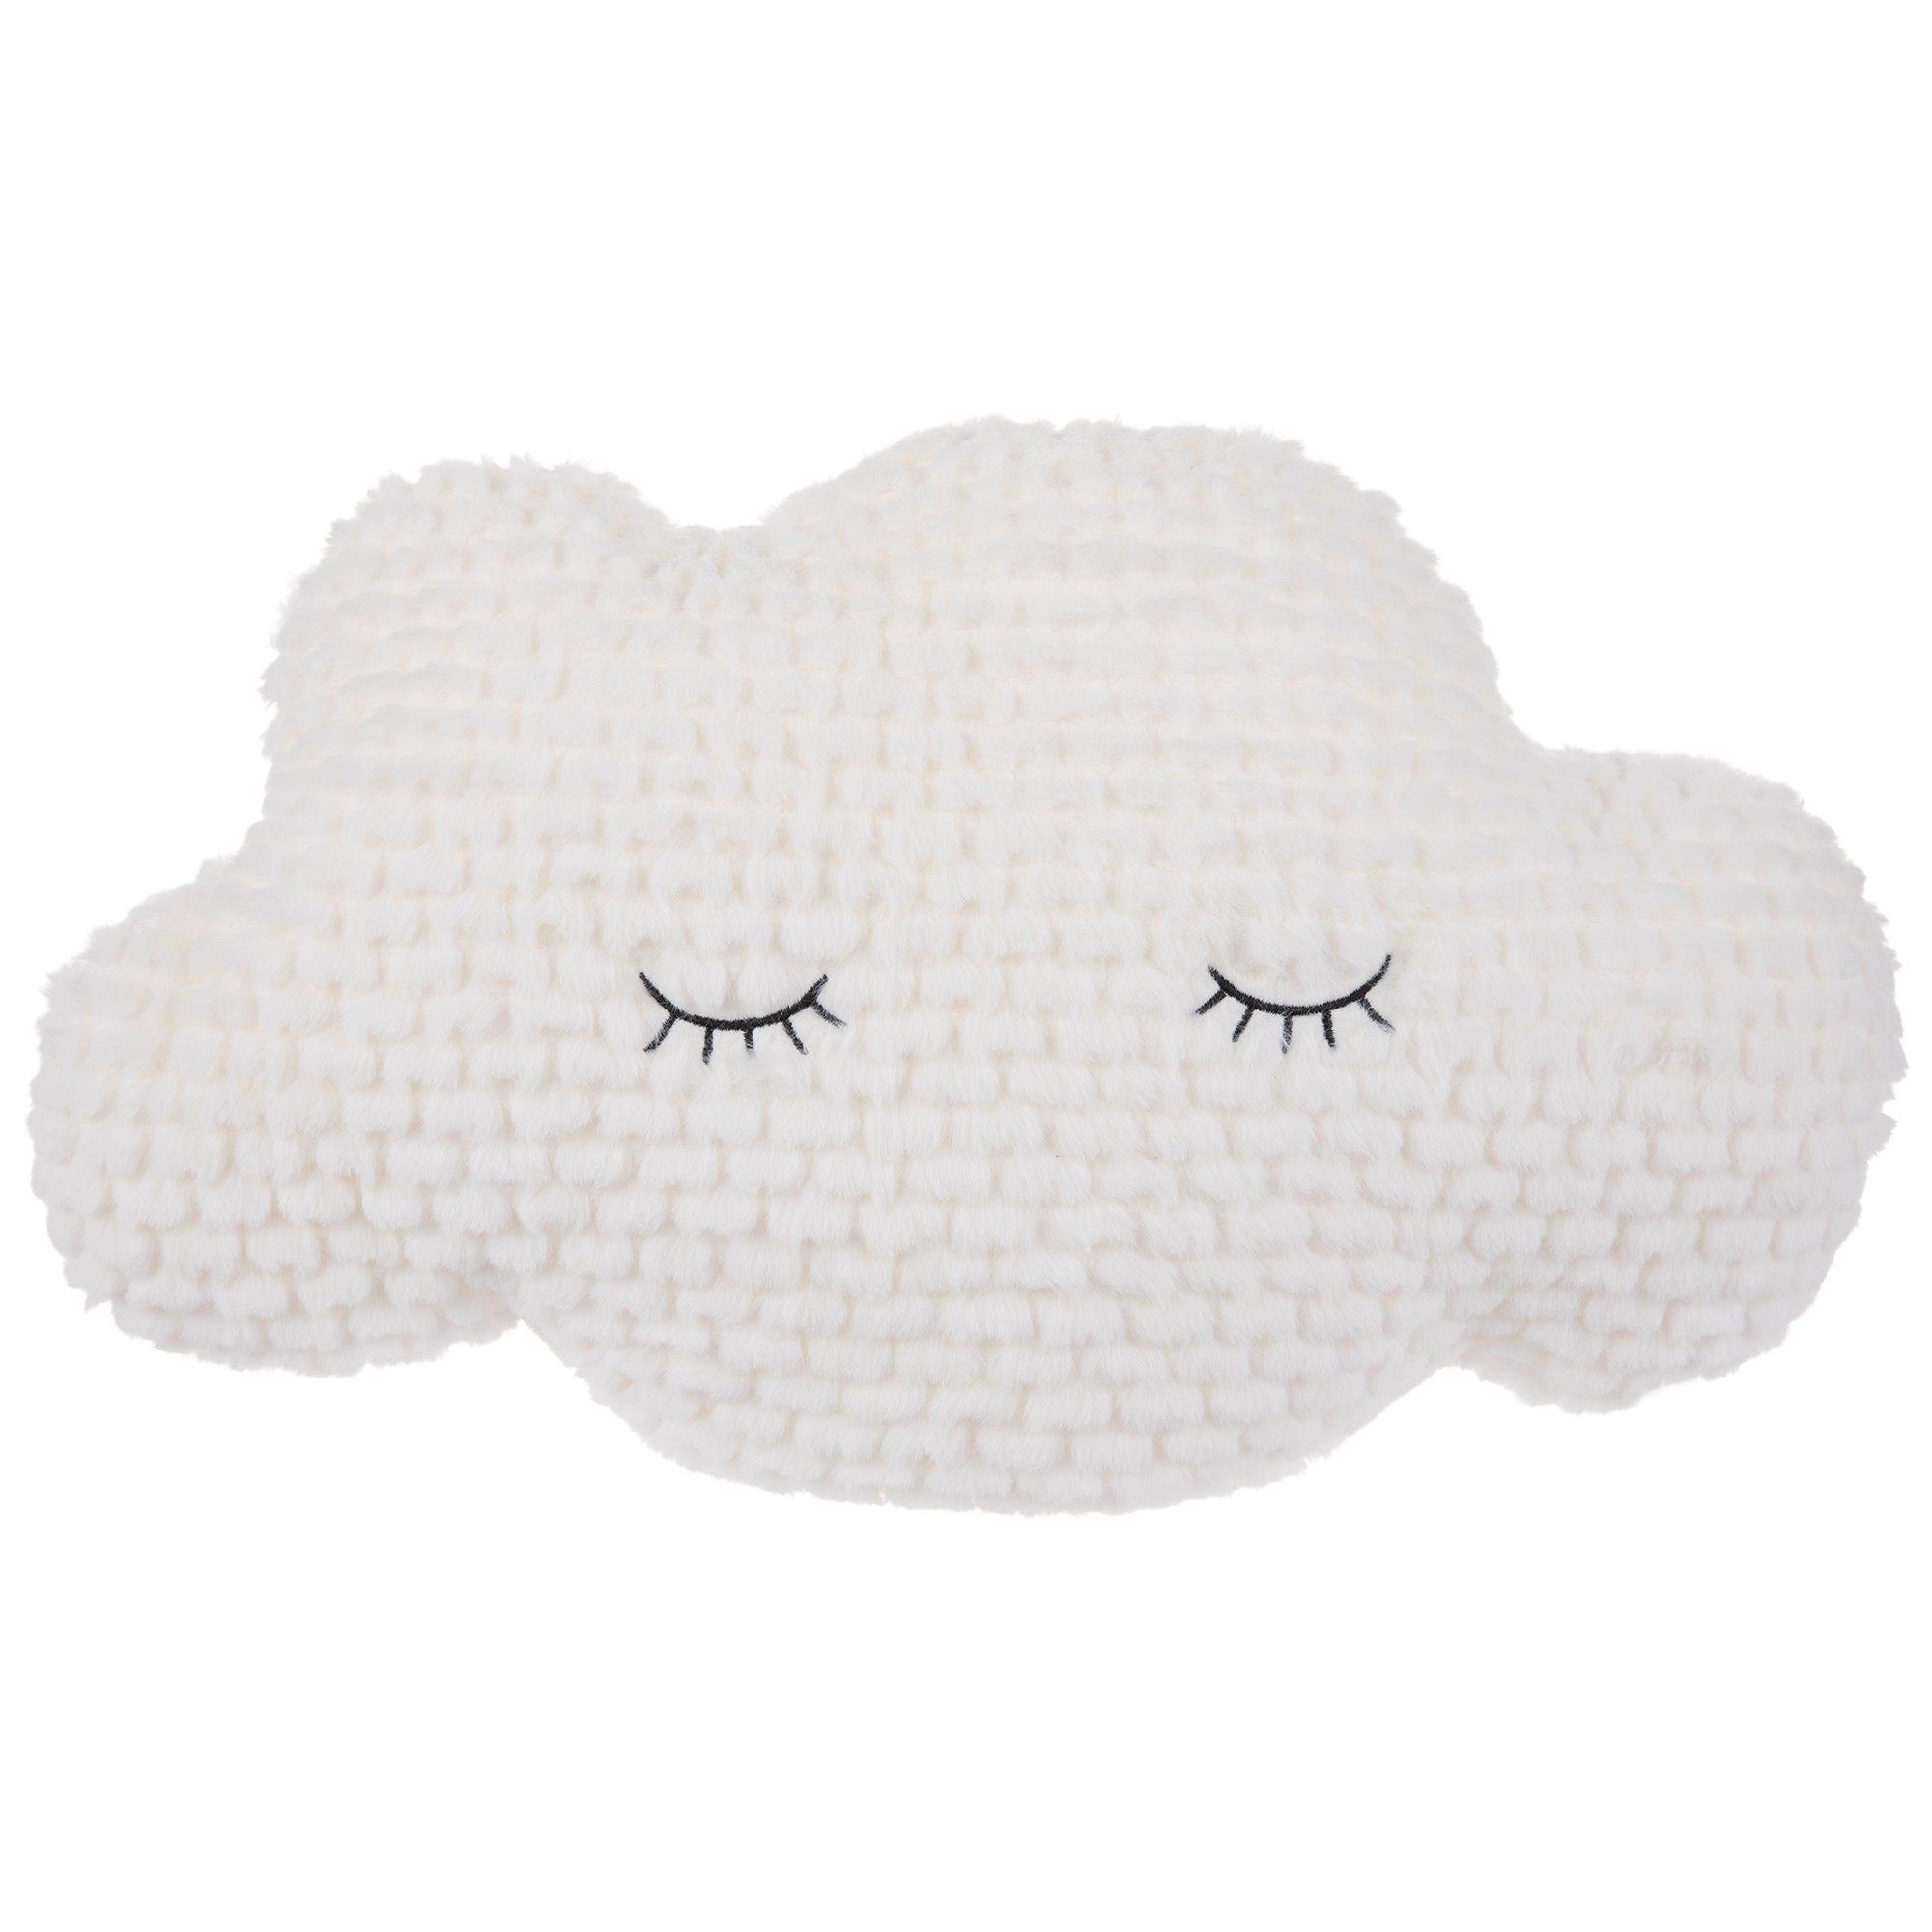 Sleepy Cloud Pillow, white - The Apple Tree